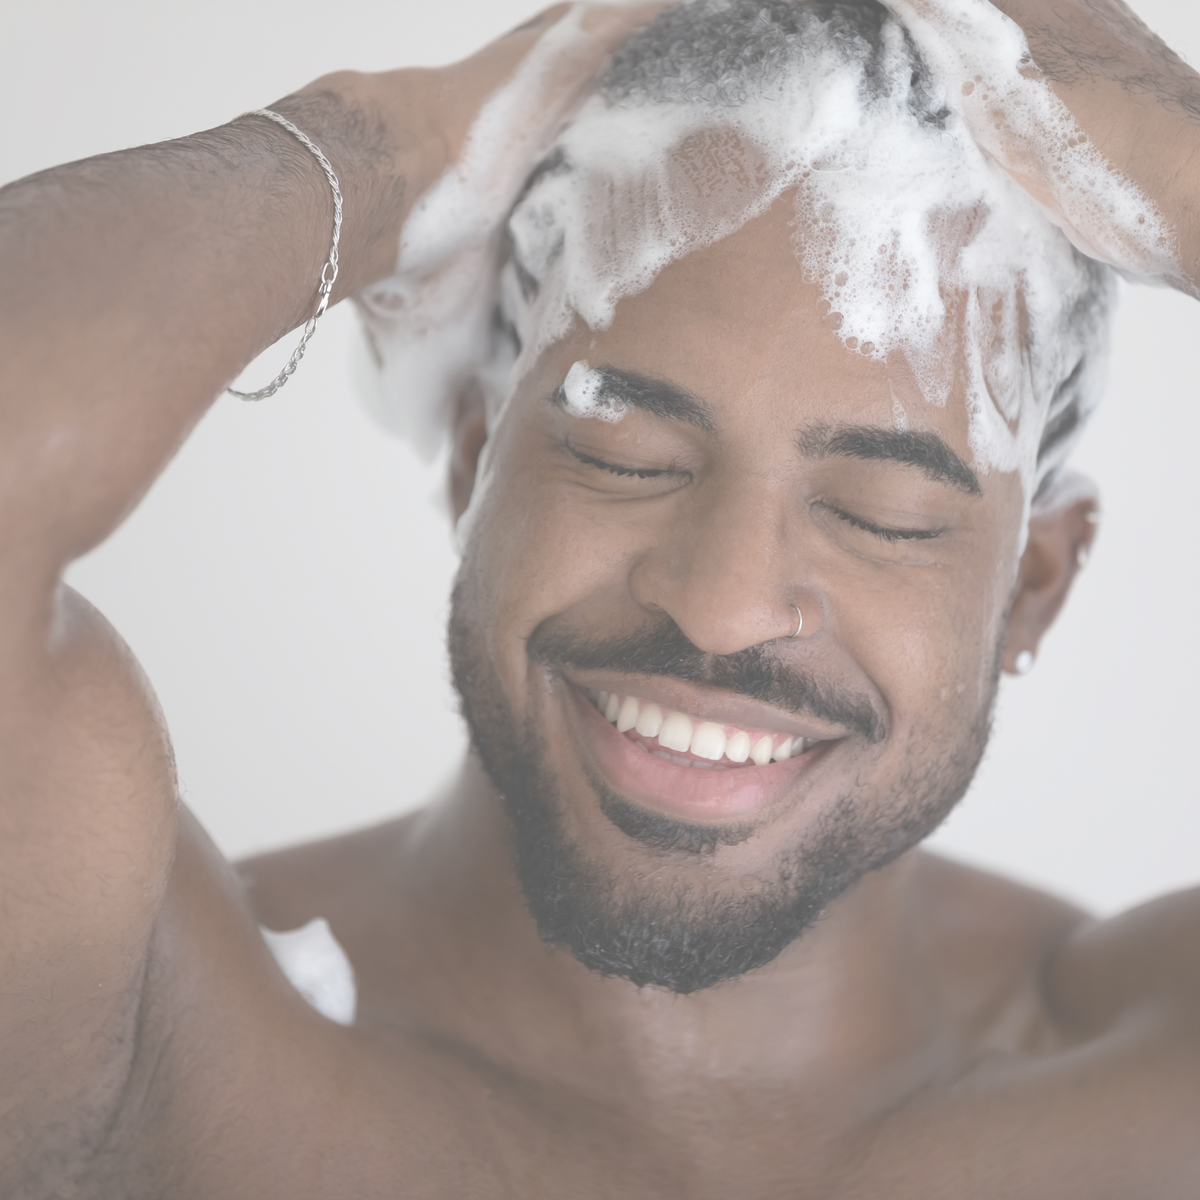 Benefit Boost Shampoo Bars